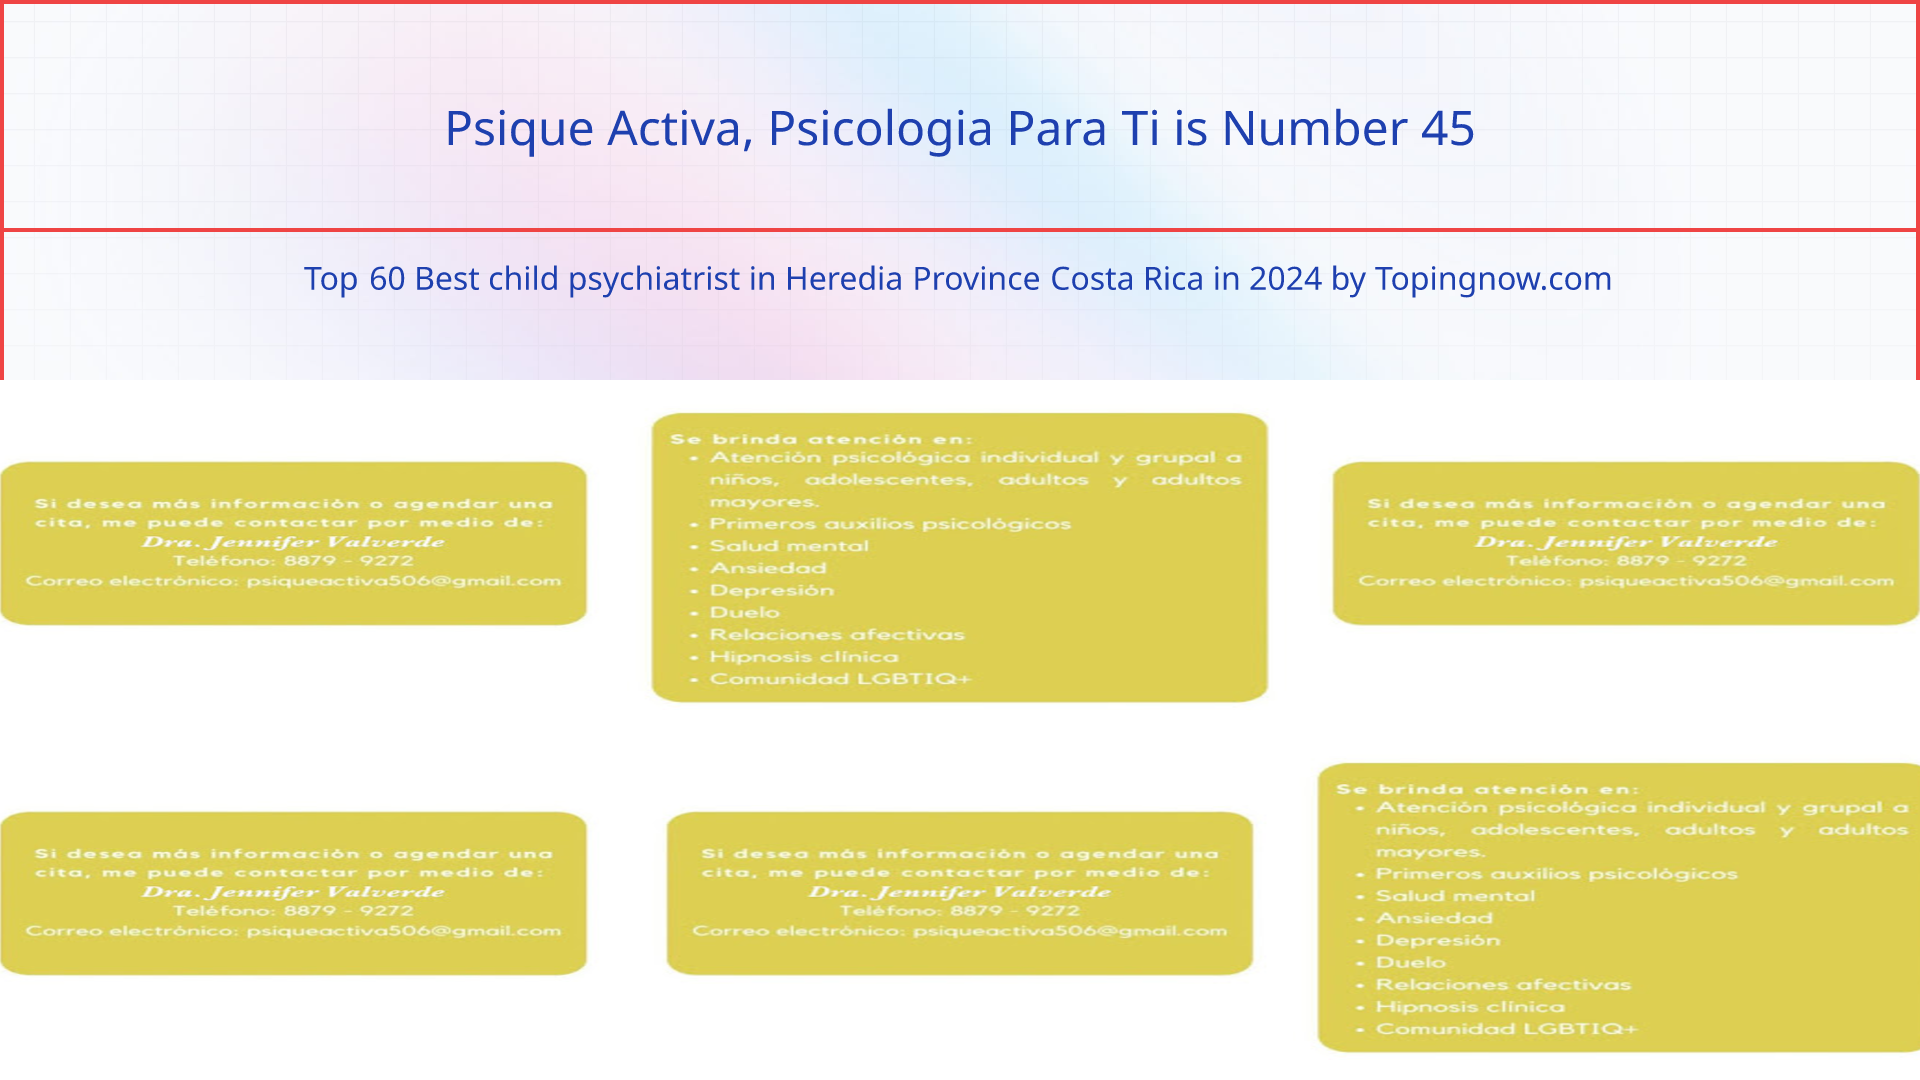 Psique Activa, Psicologia Para Ti: Top 60 Best child psychiatrist in Heredia Province Costa Rica in 2024